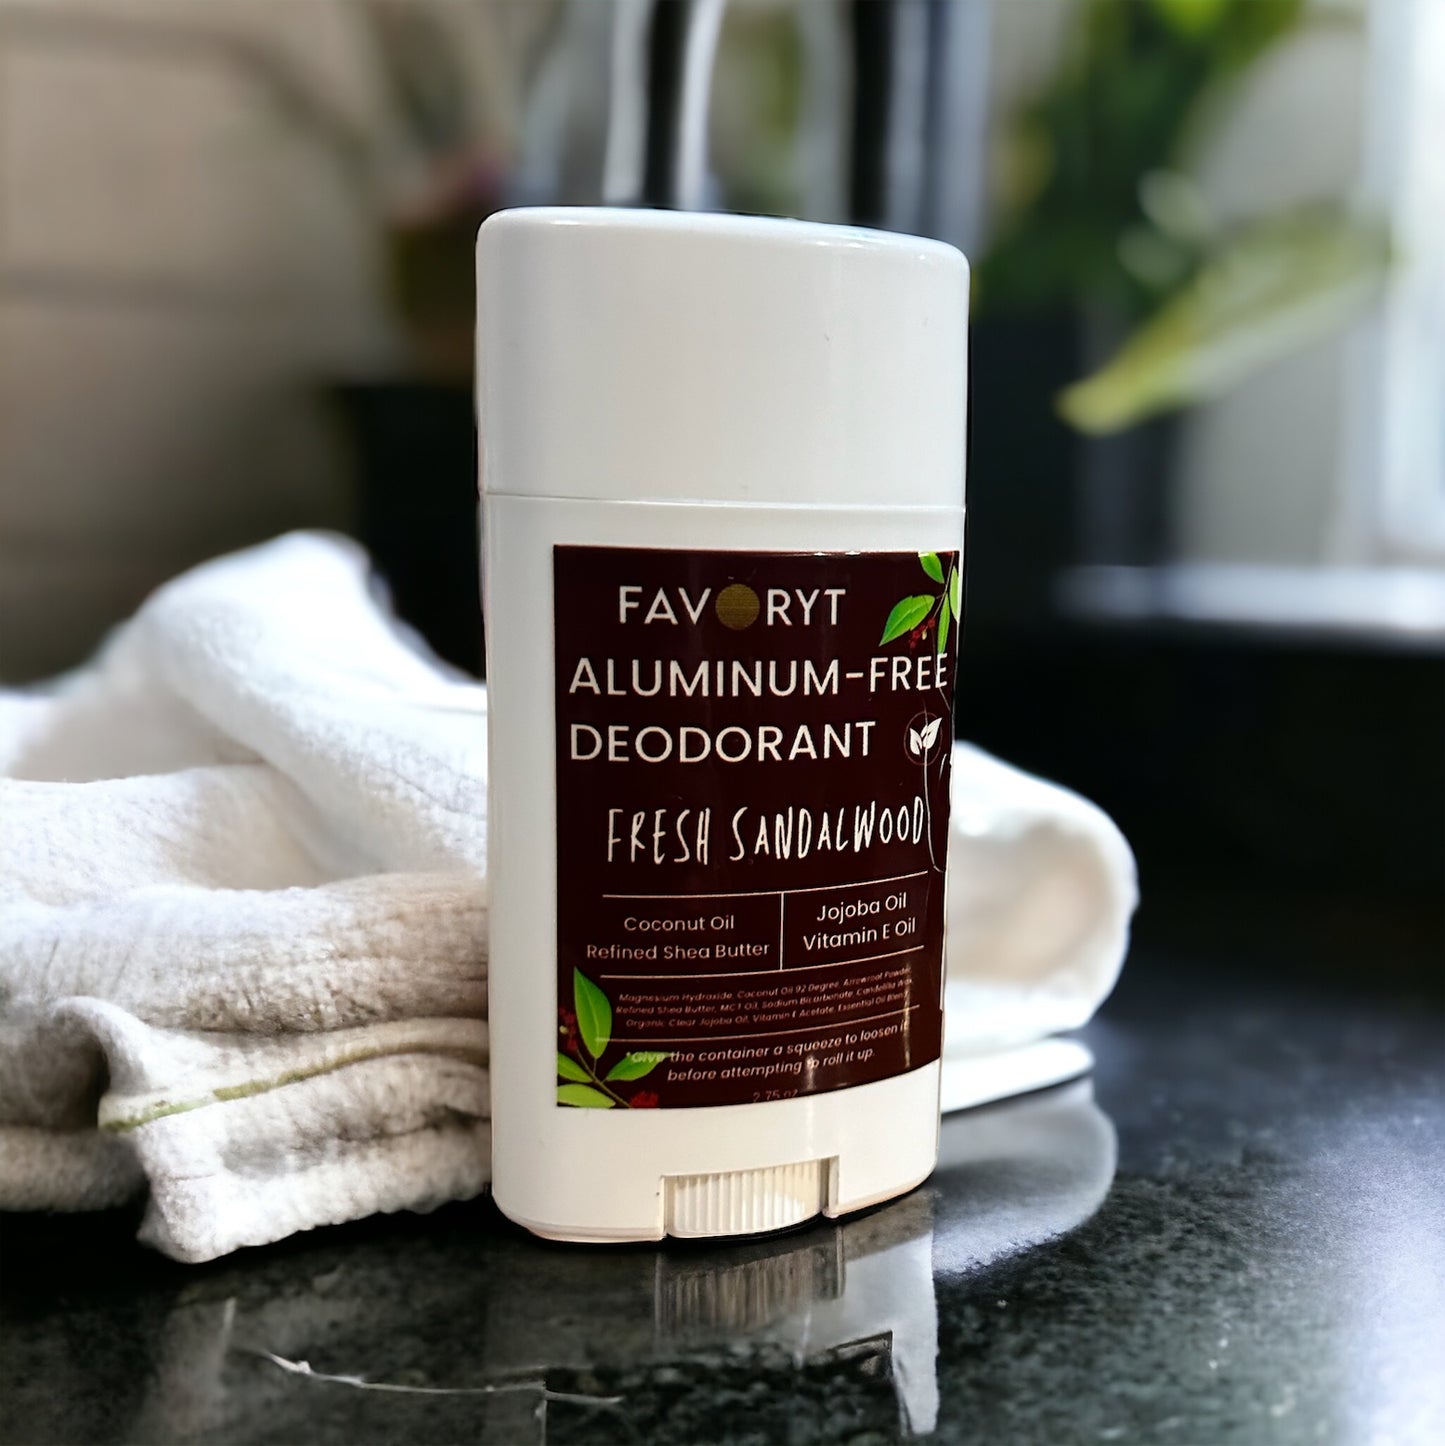 FAVORYT Aluminum-free Natural Deodorant